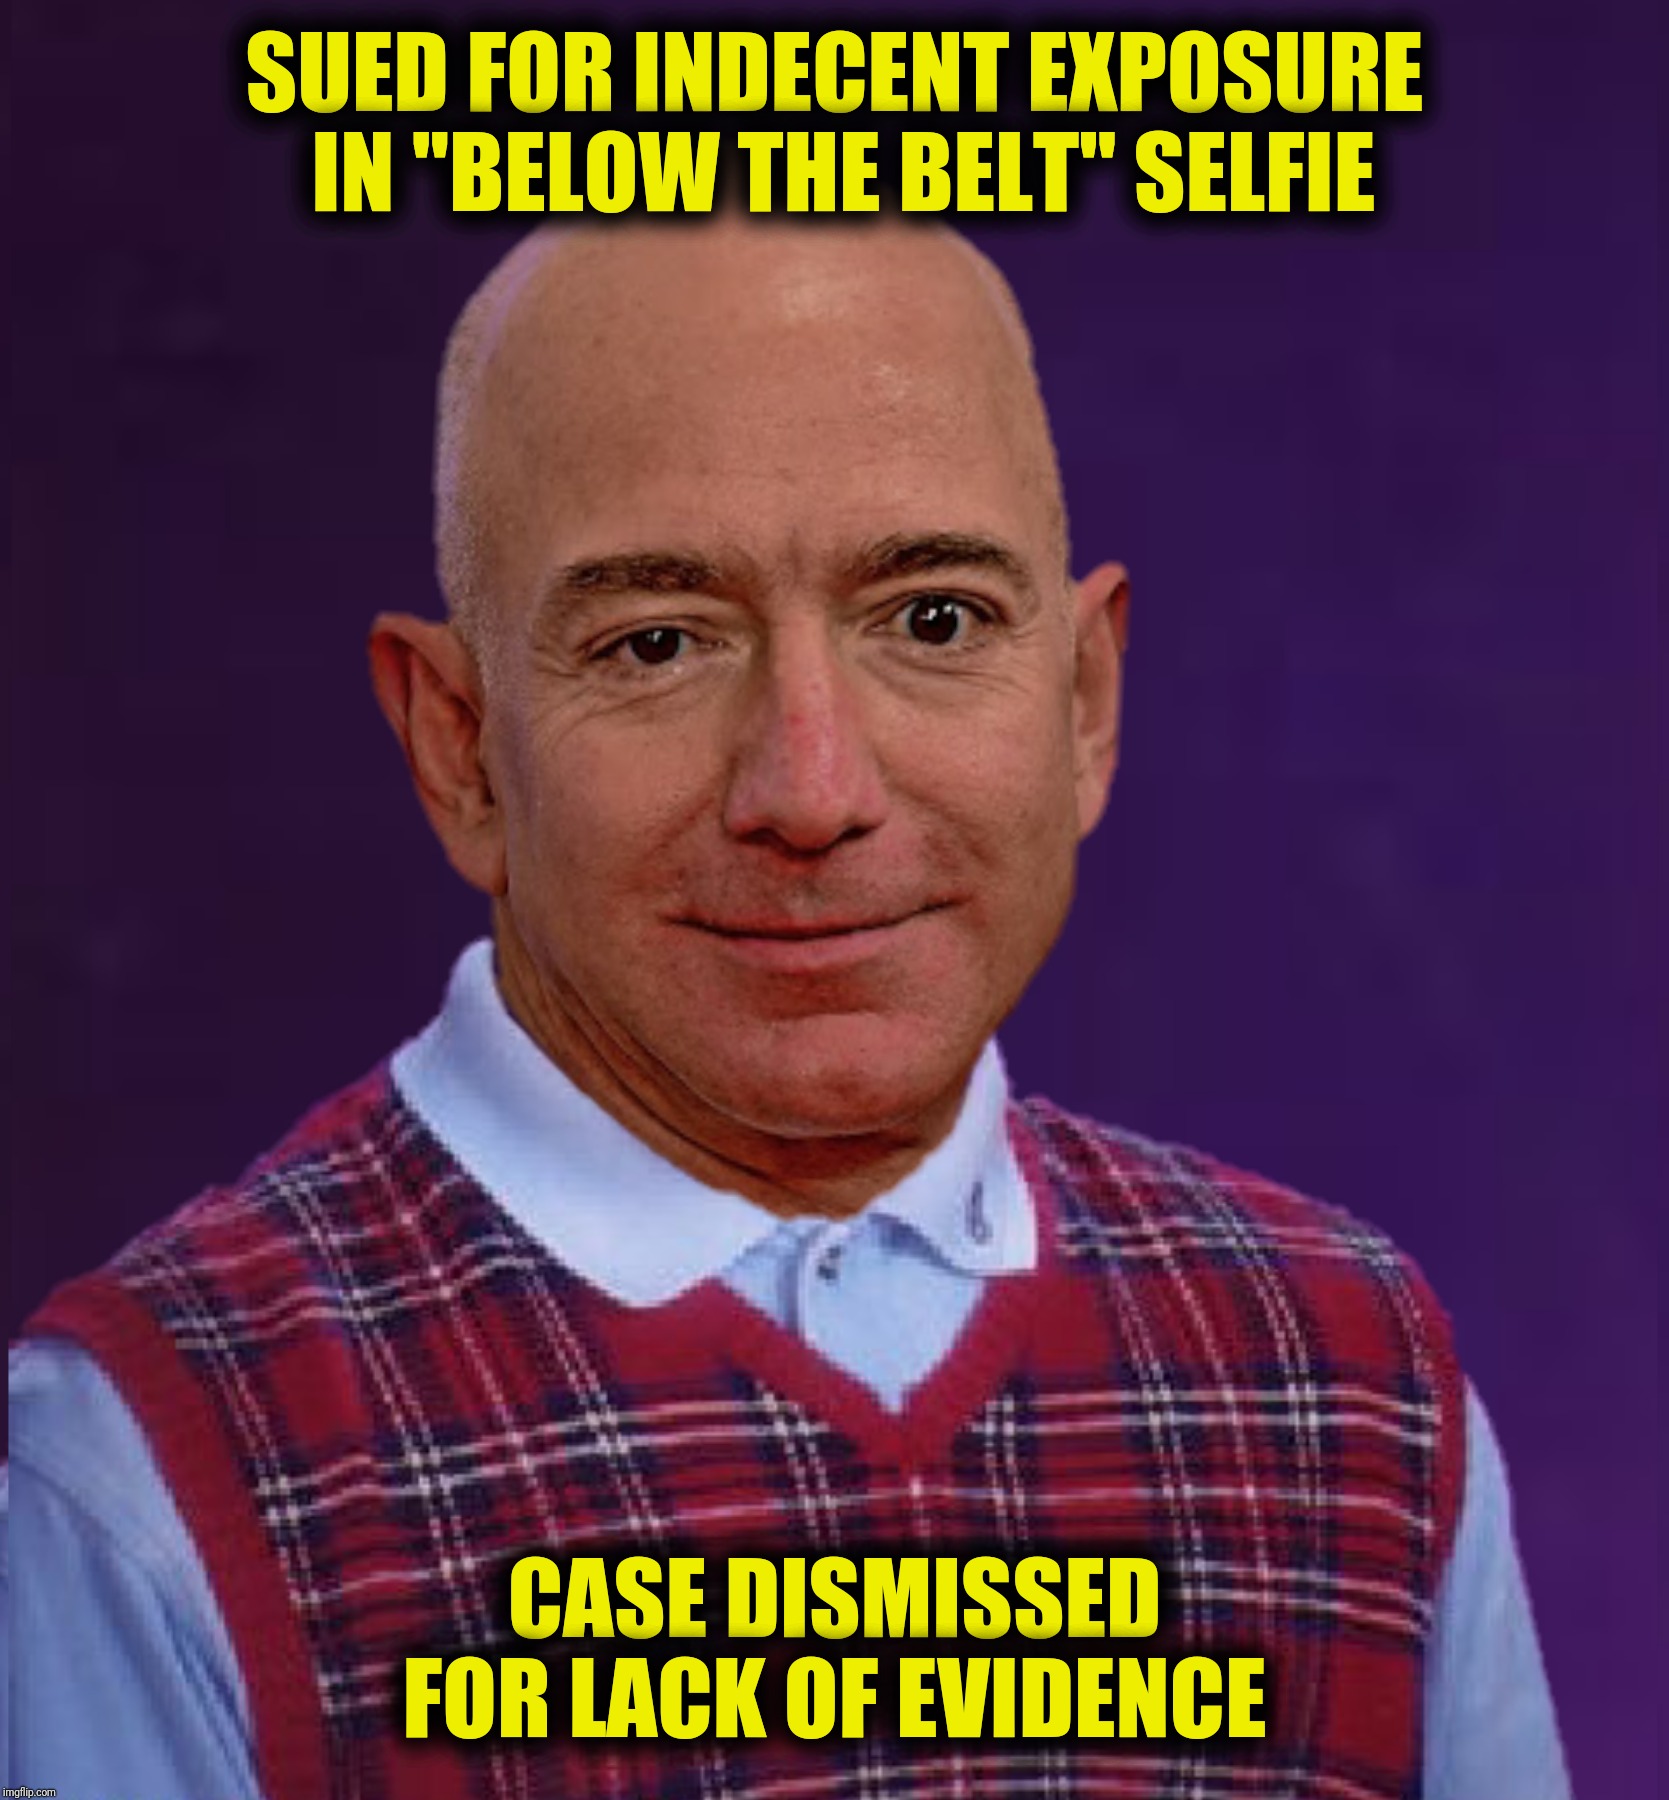 Did you notcie the fake hand? Follow for good luck ❤️ #jeffbezos #meme, Jeff Bezos